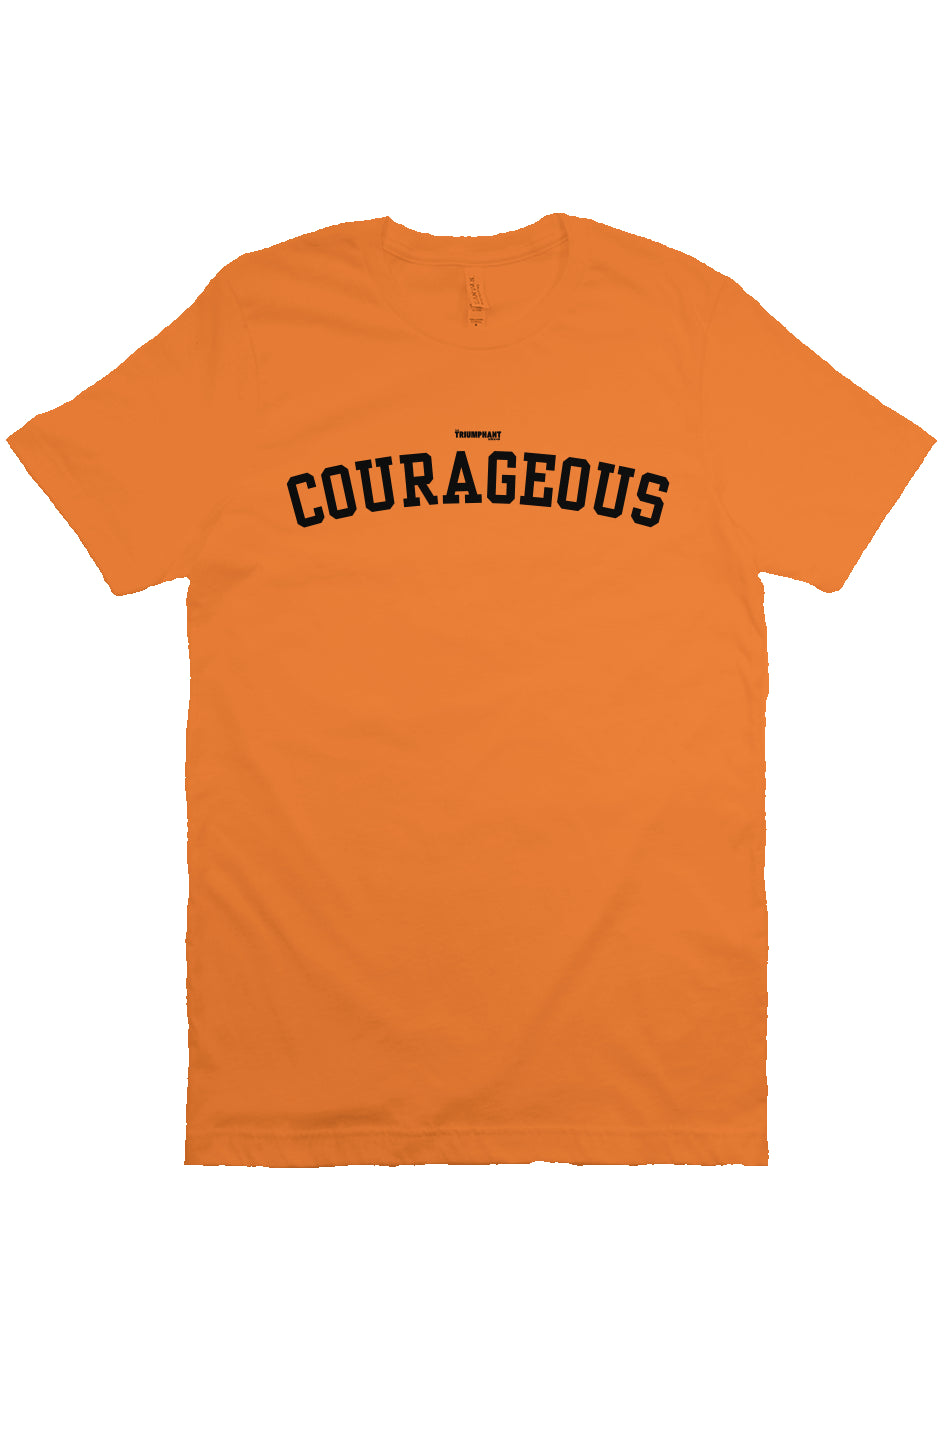 Courageous | A&D Tee